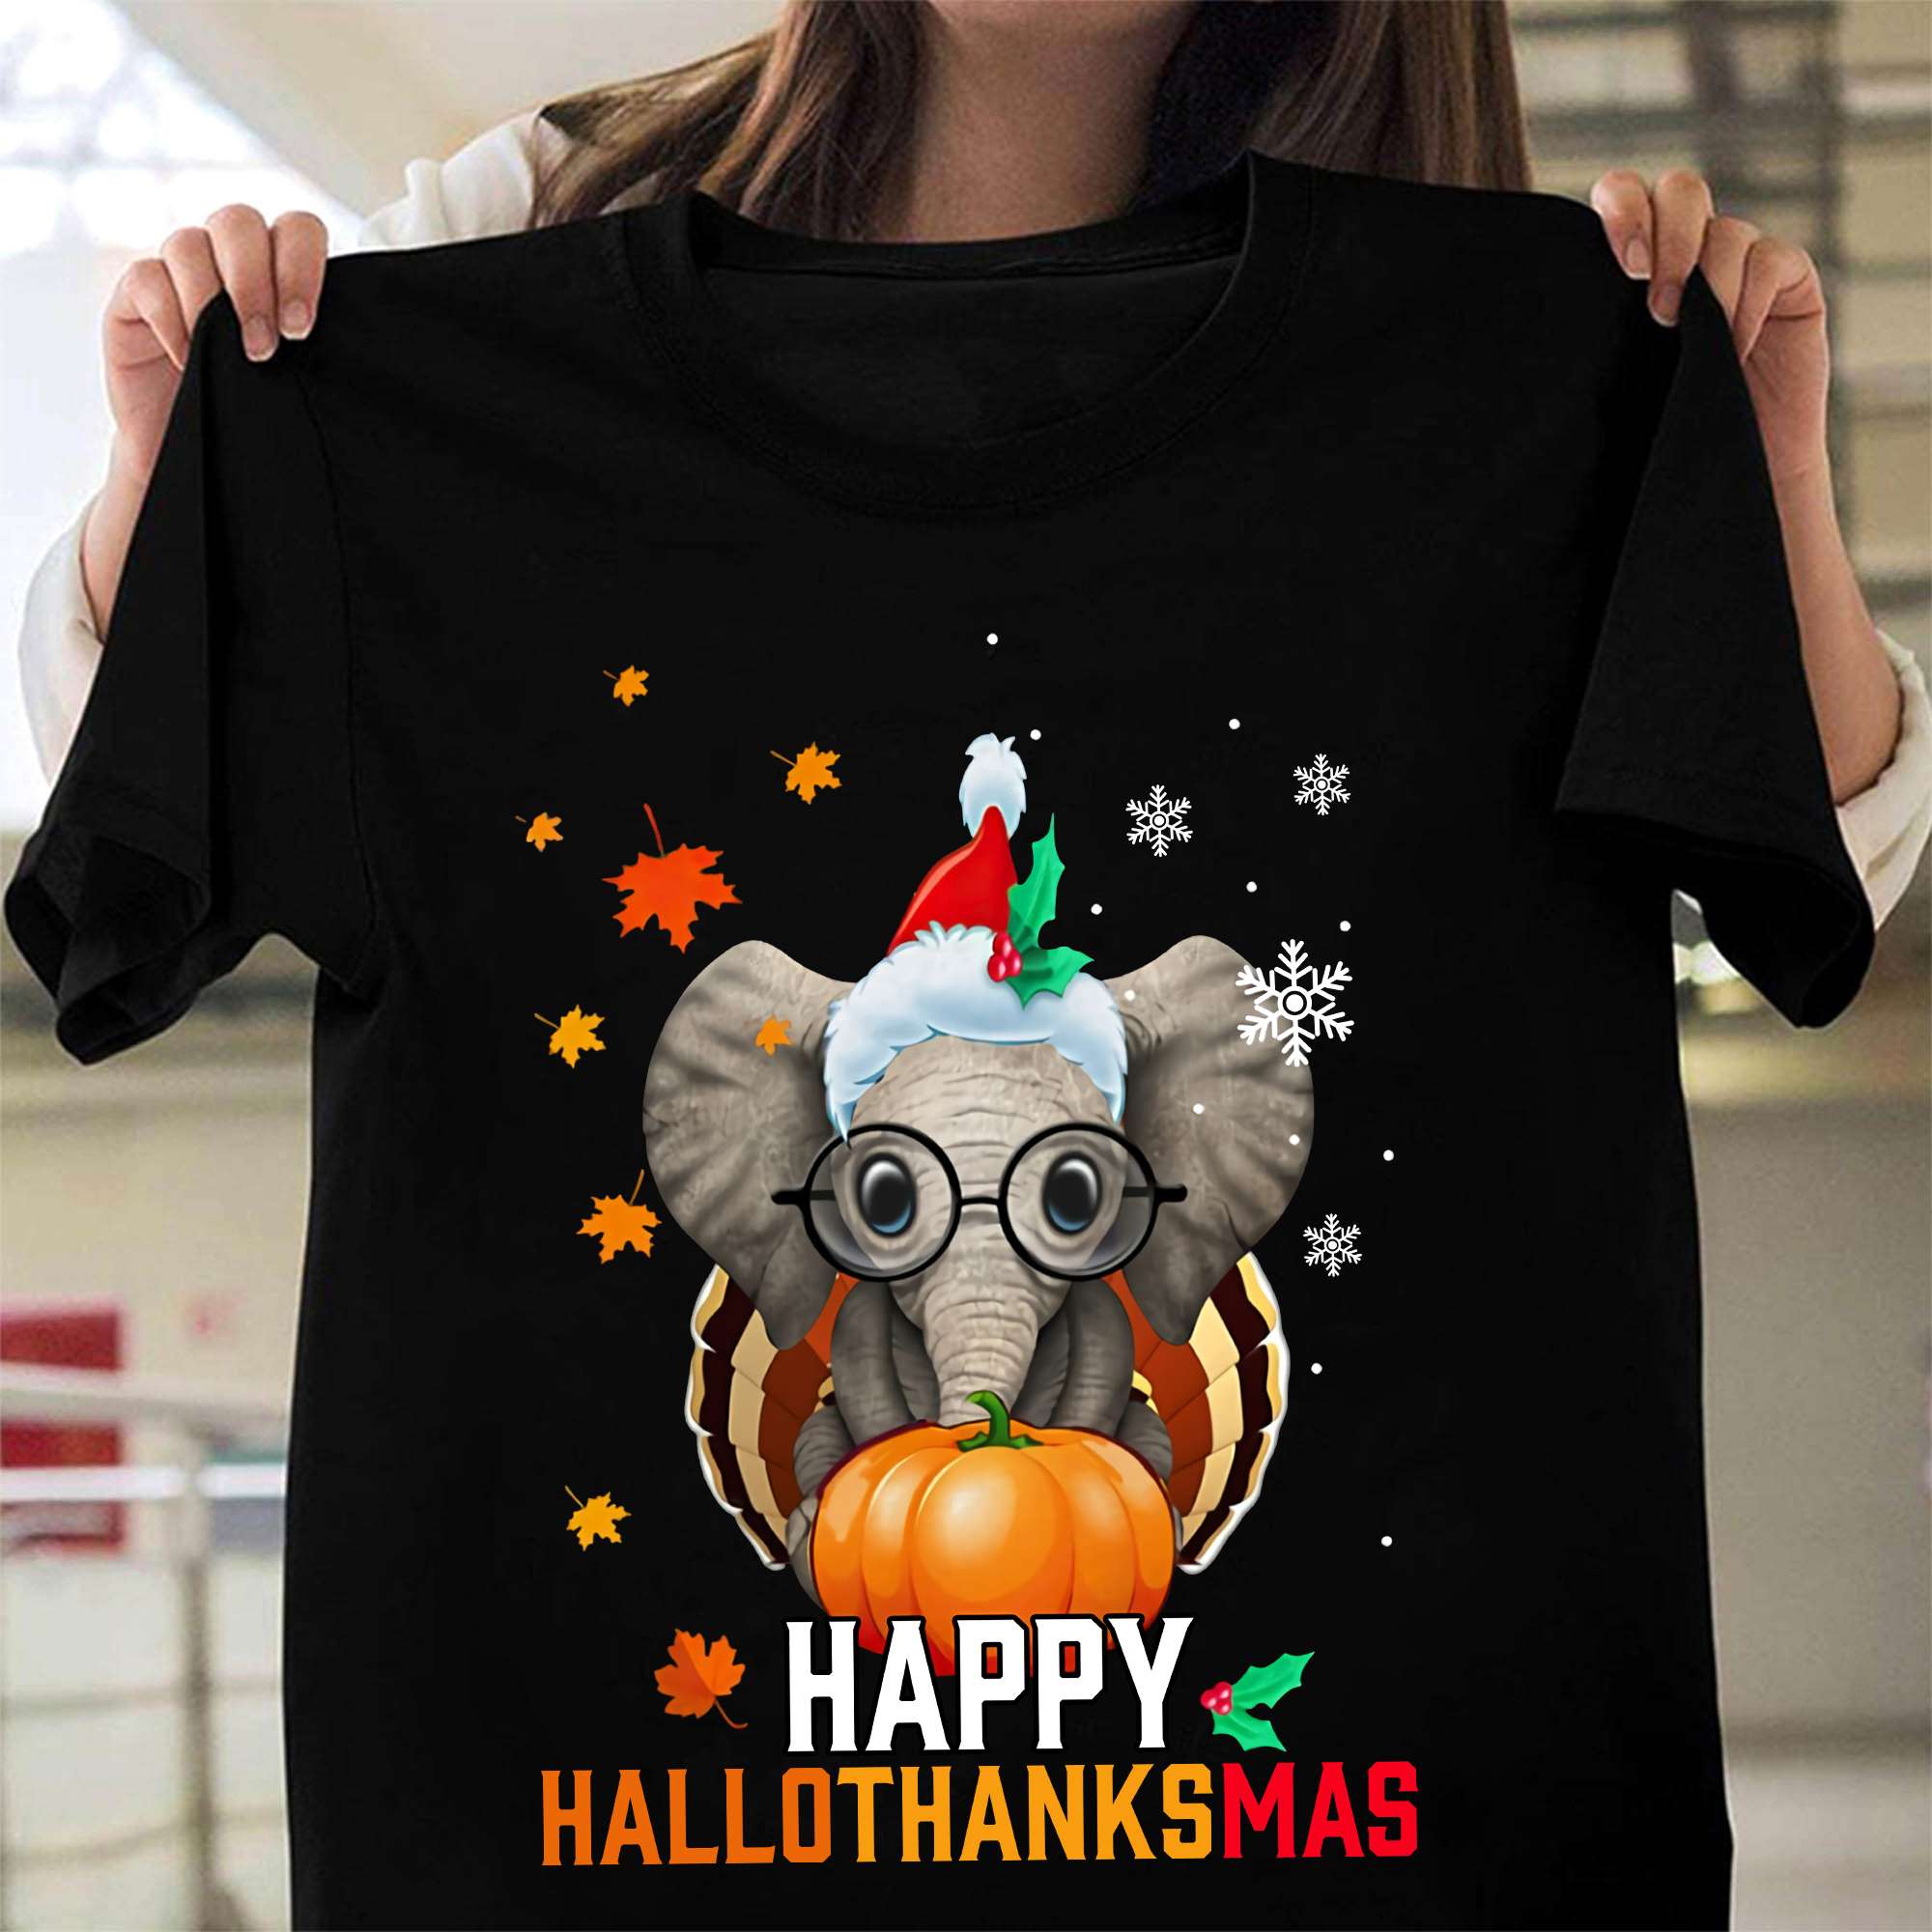 Happy HalloThanksMas - Elephant and pumpkin, Halloween gift, Christmas day T-shirt